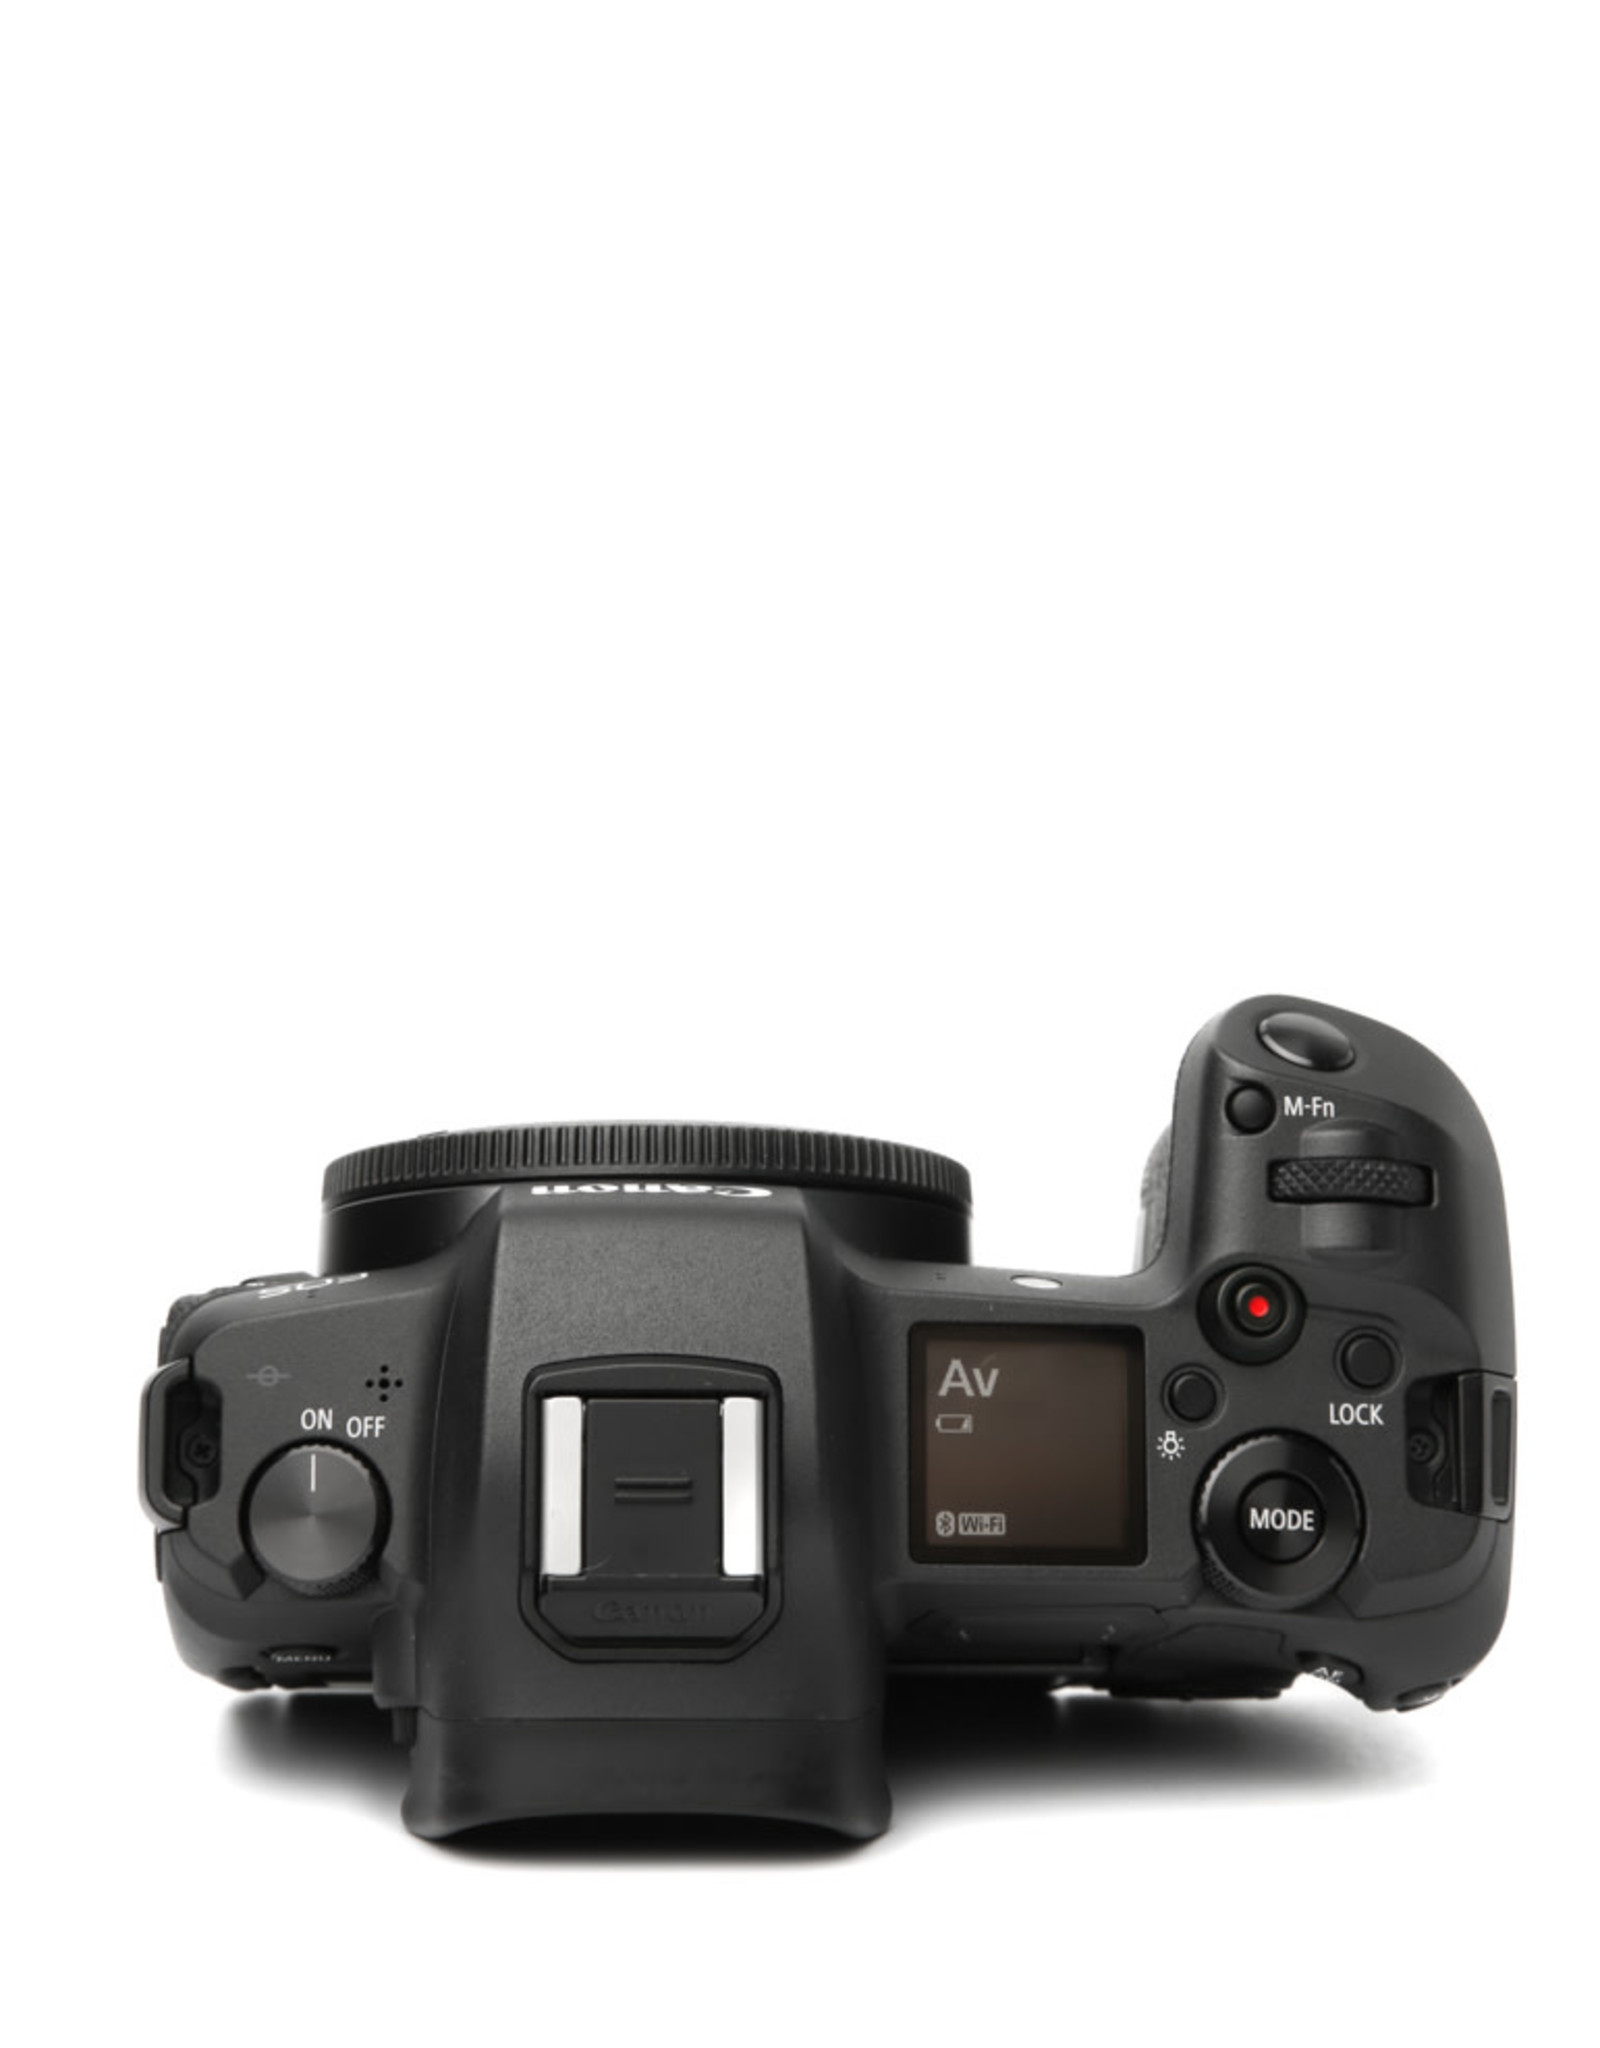 Canon Canon EOS R Mirrorless Digital Camera